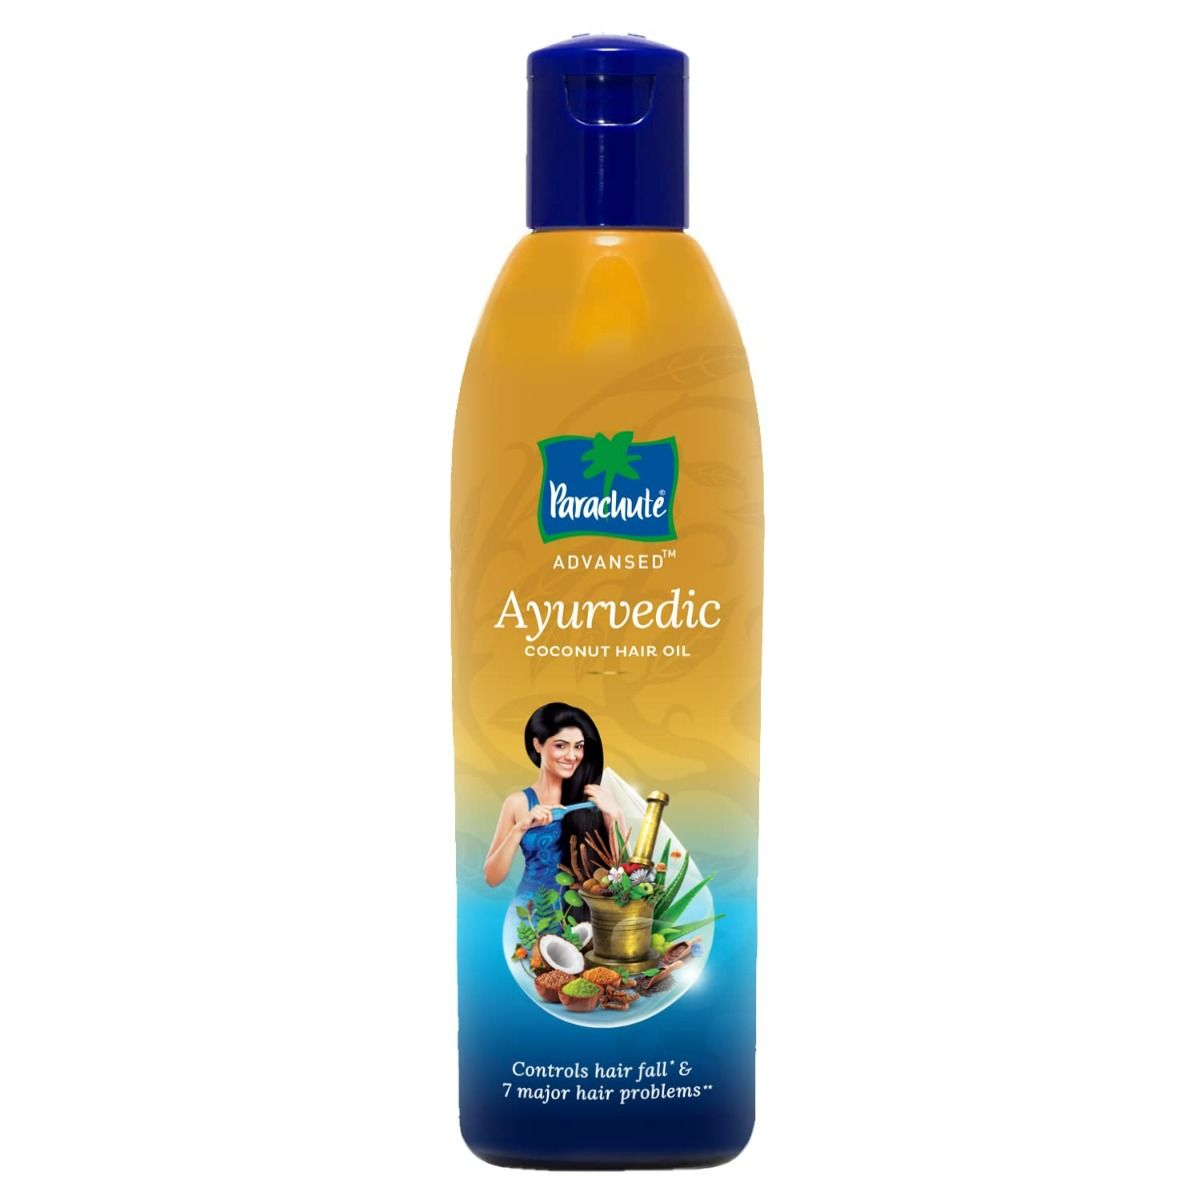 Buy Parachute Advansed Ayurvedic Coconut Hair Oil, 180 ml Online